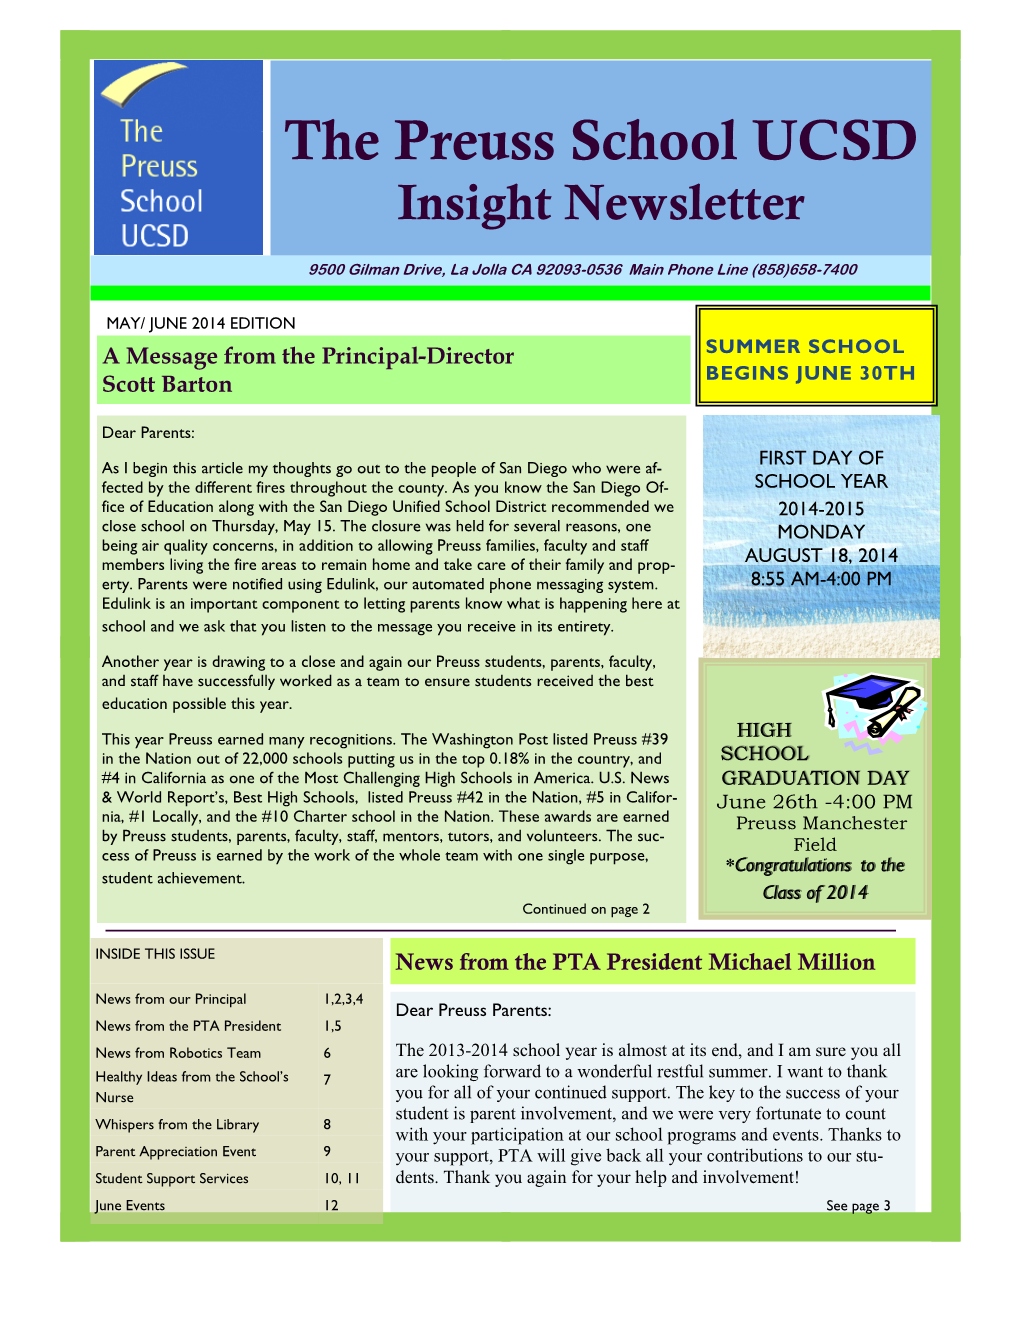 The Preuss School UCSD Insight Newsletter